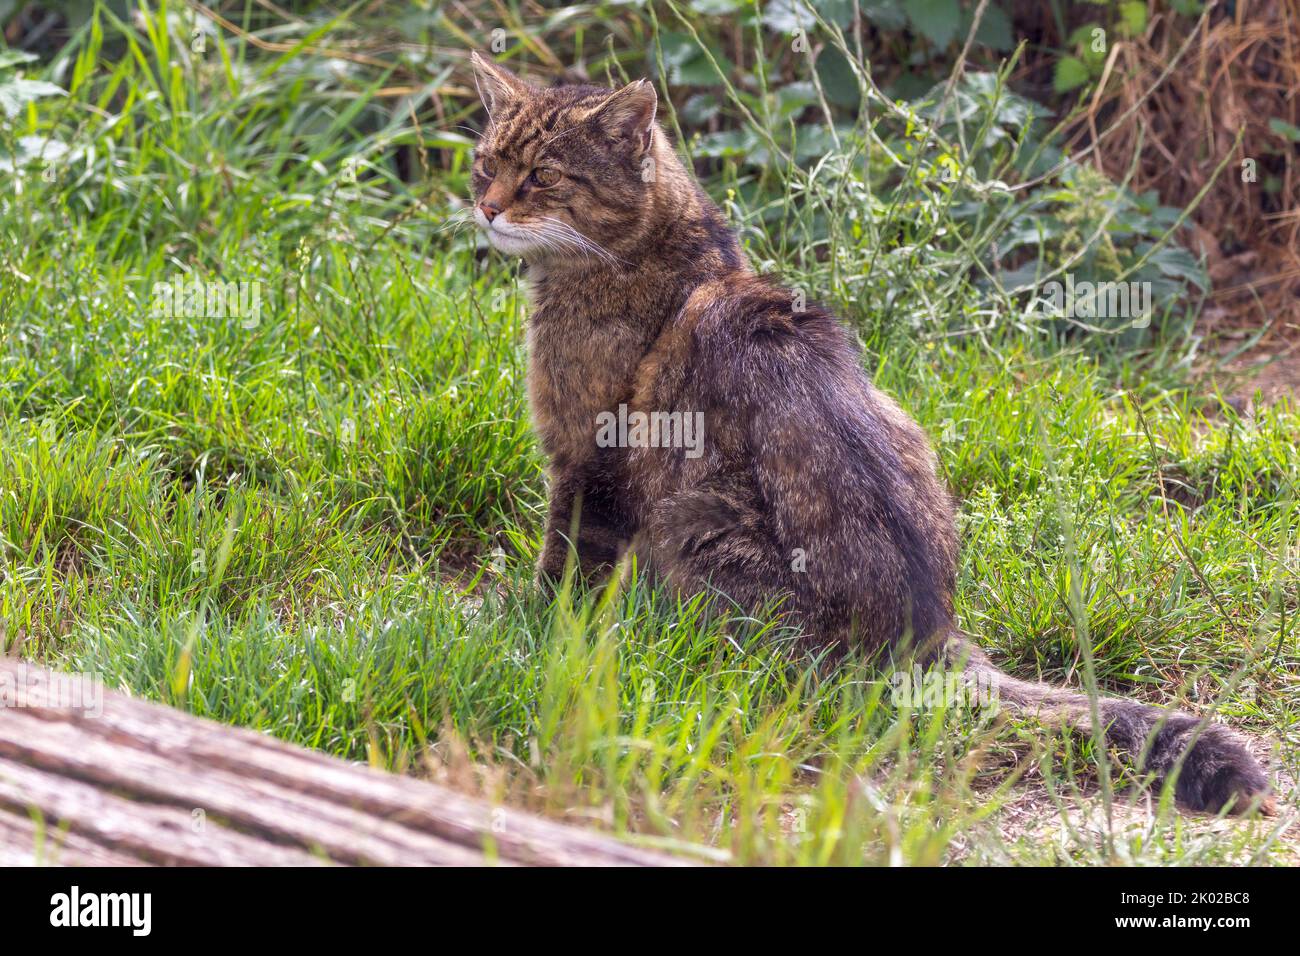 Scottish wild cat (Felis silvestris) captive breeding programme. Large wild tabby looking cat bushy blunt tail black rings and tip dark stripes on fur Stock Photo